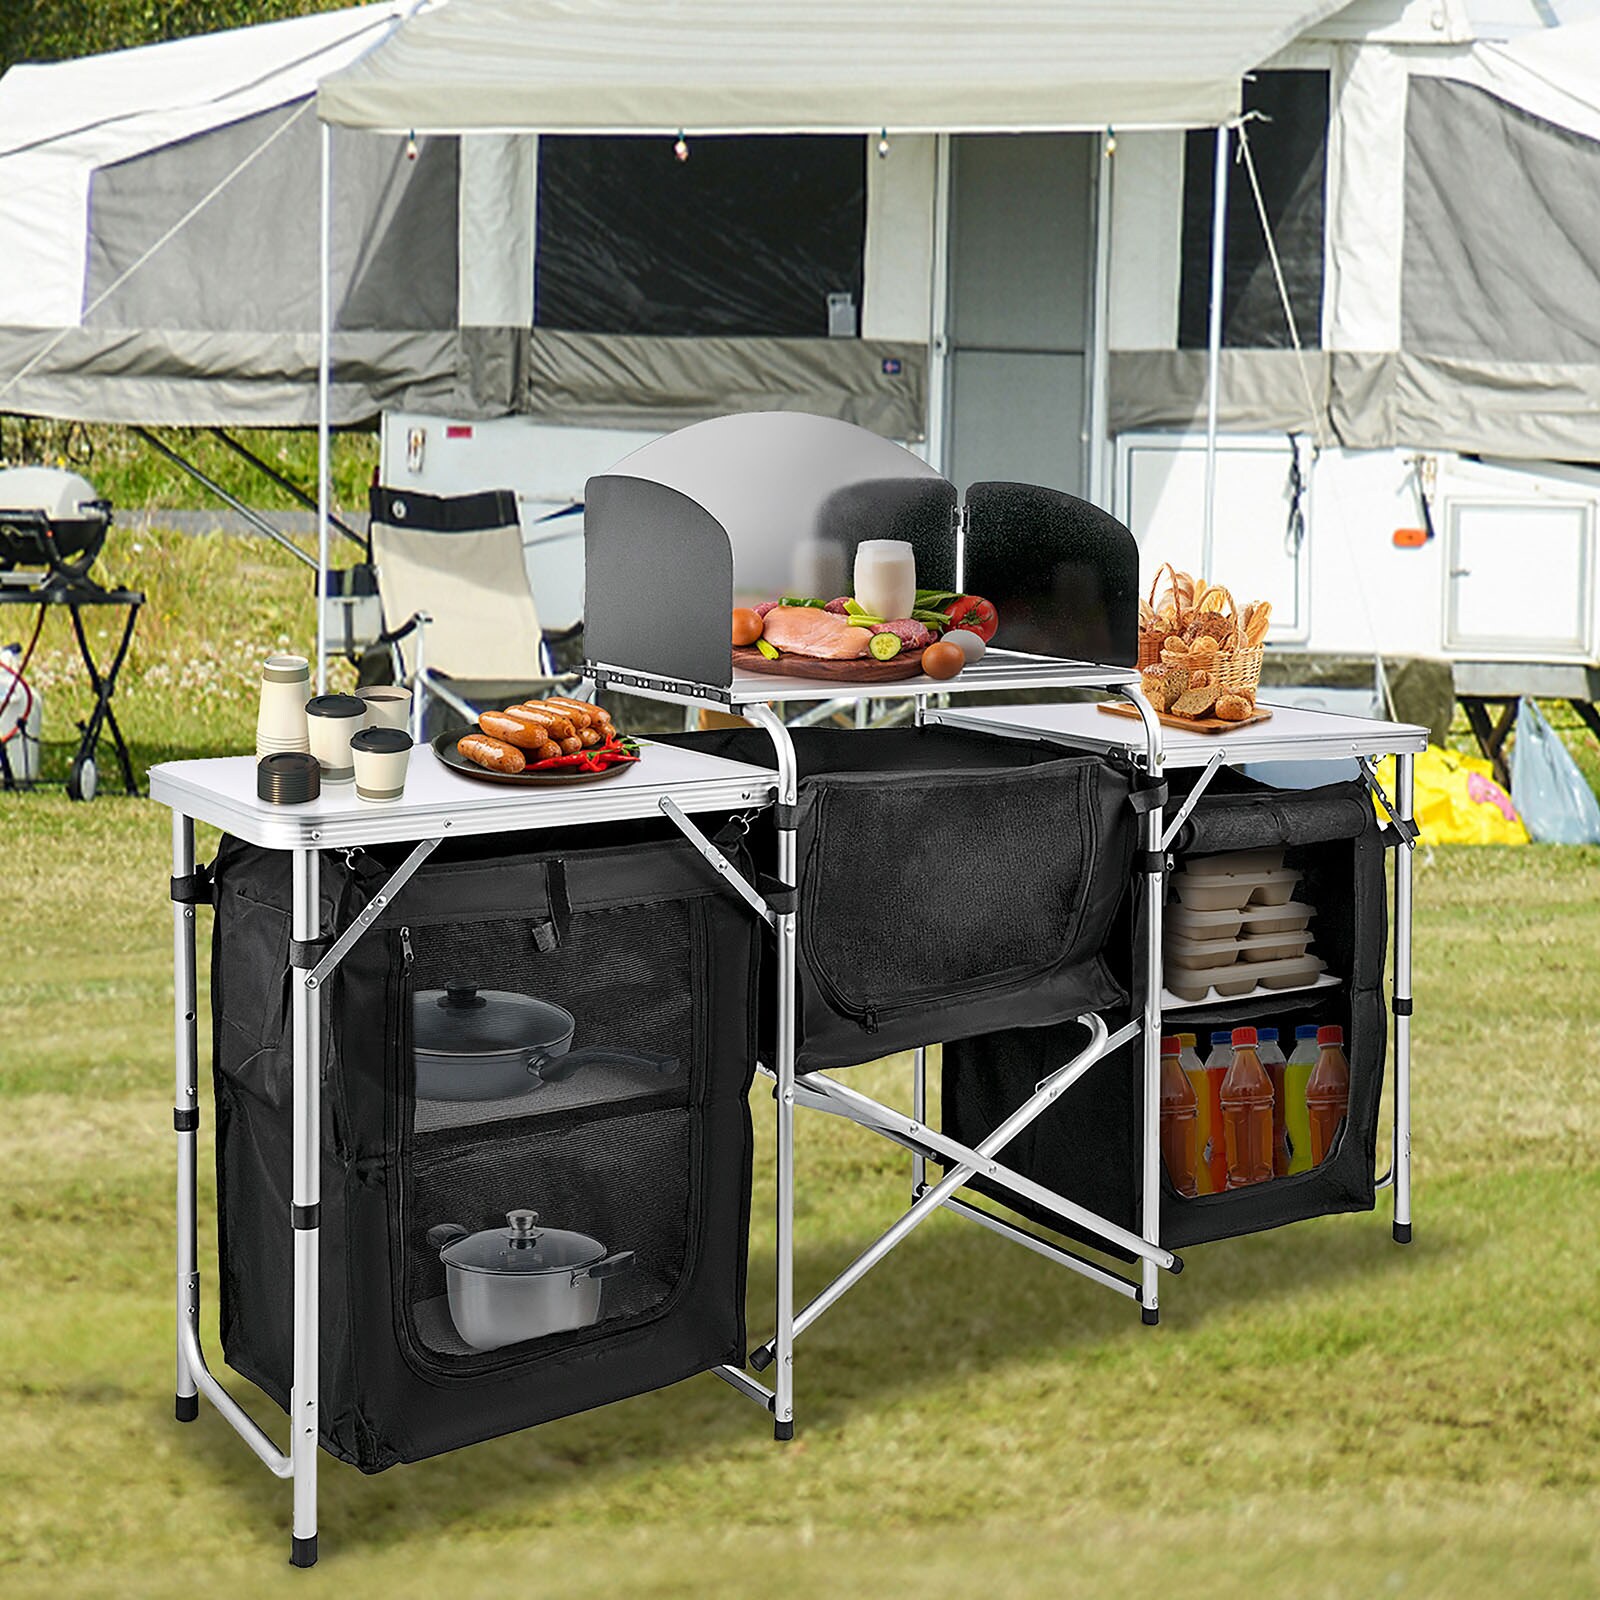 VEVOR Camping Kitchen Table with 3 Storage Organizer Outdoor